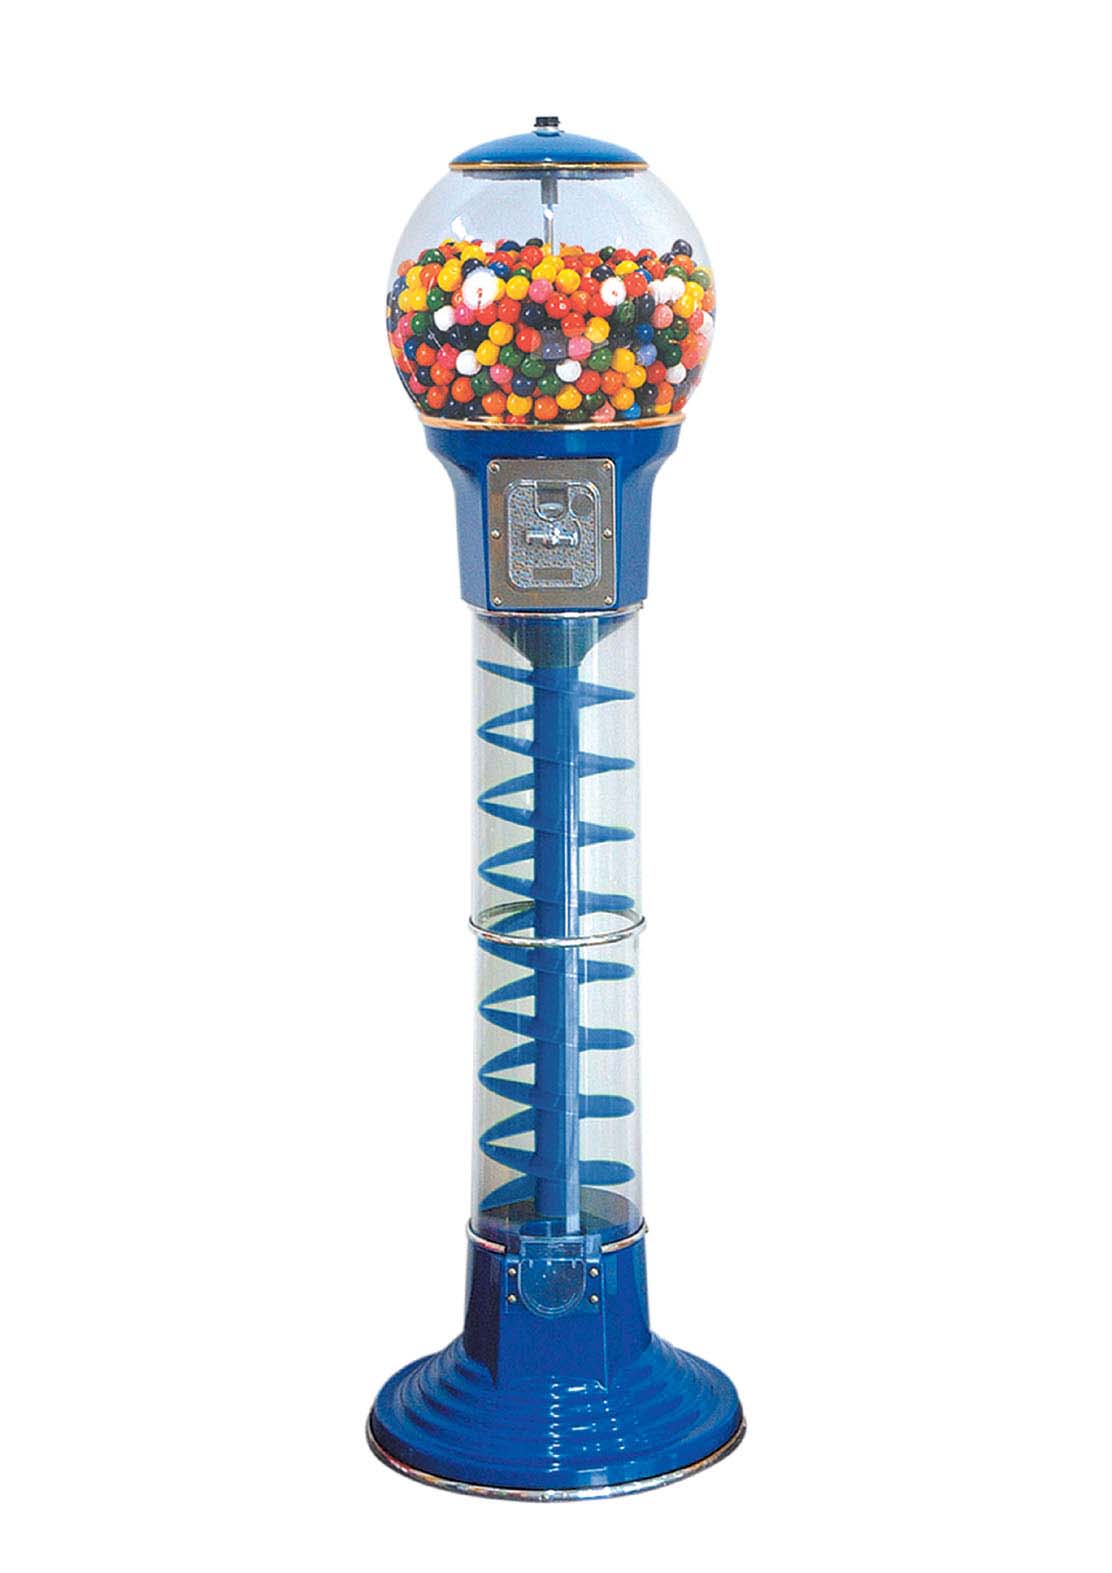 Gumball & Bouncing Ball Vending Machine